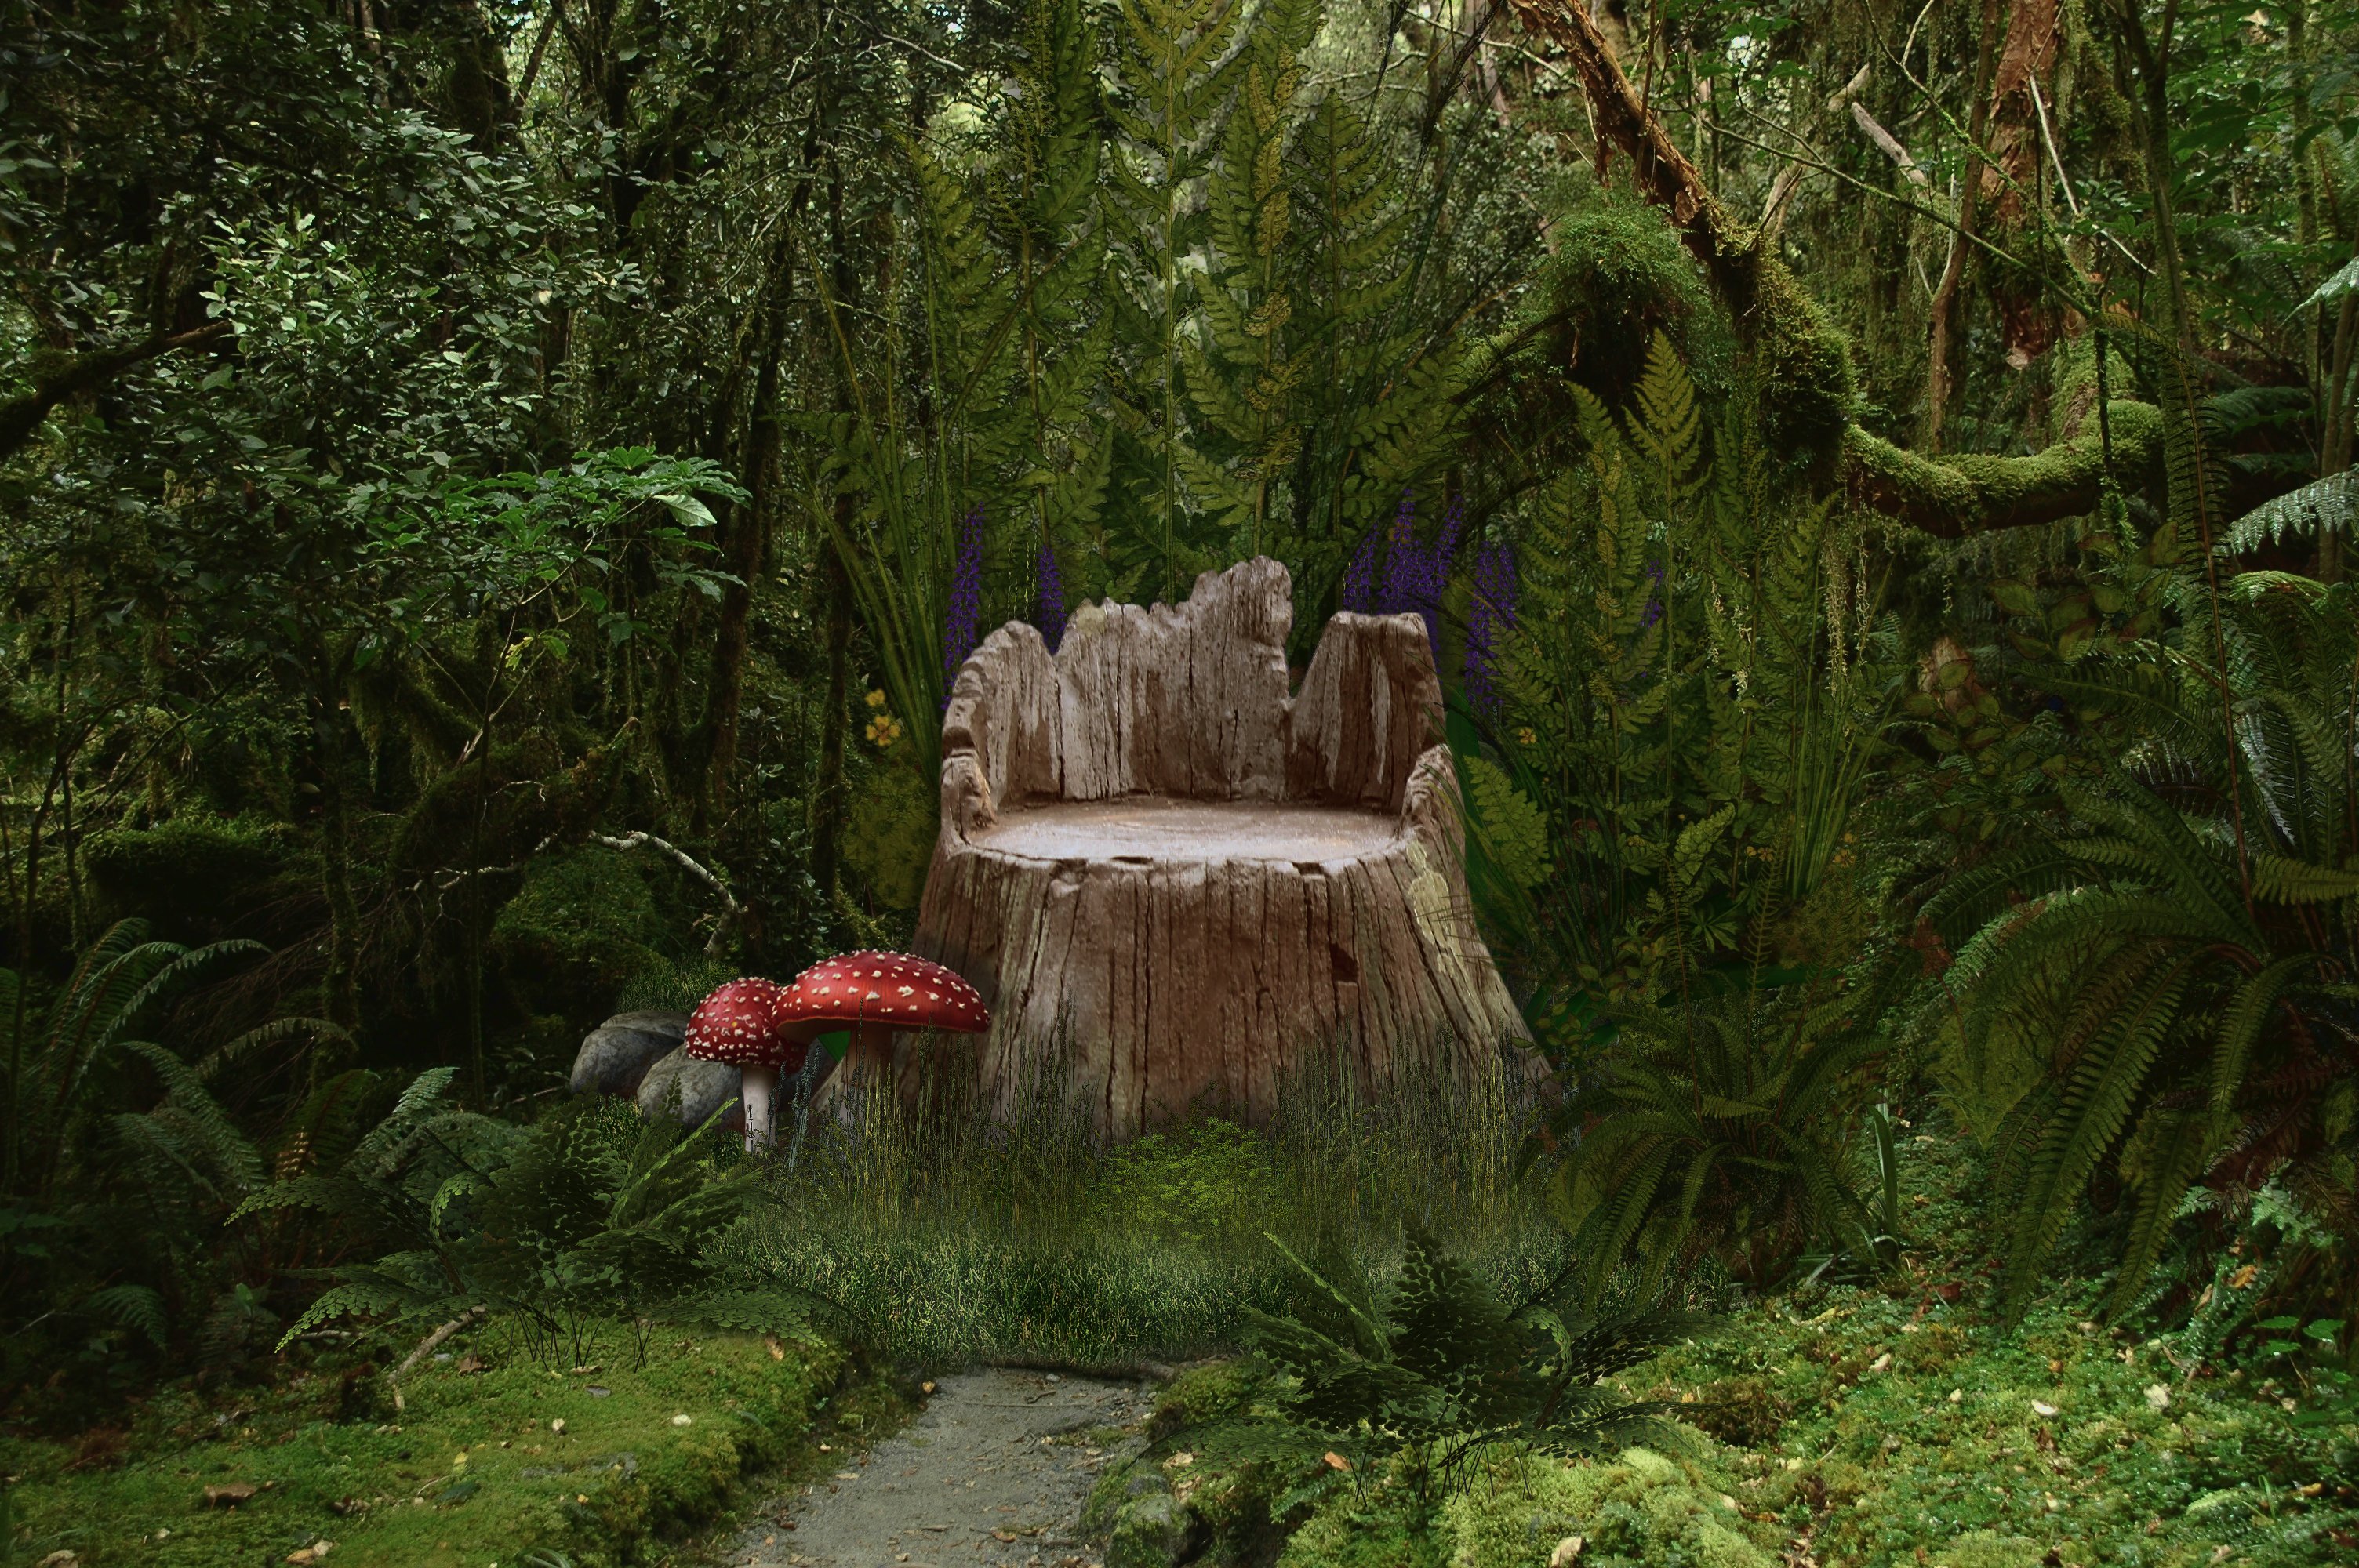 mushroom, artistic, forest, flower, stump